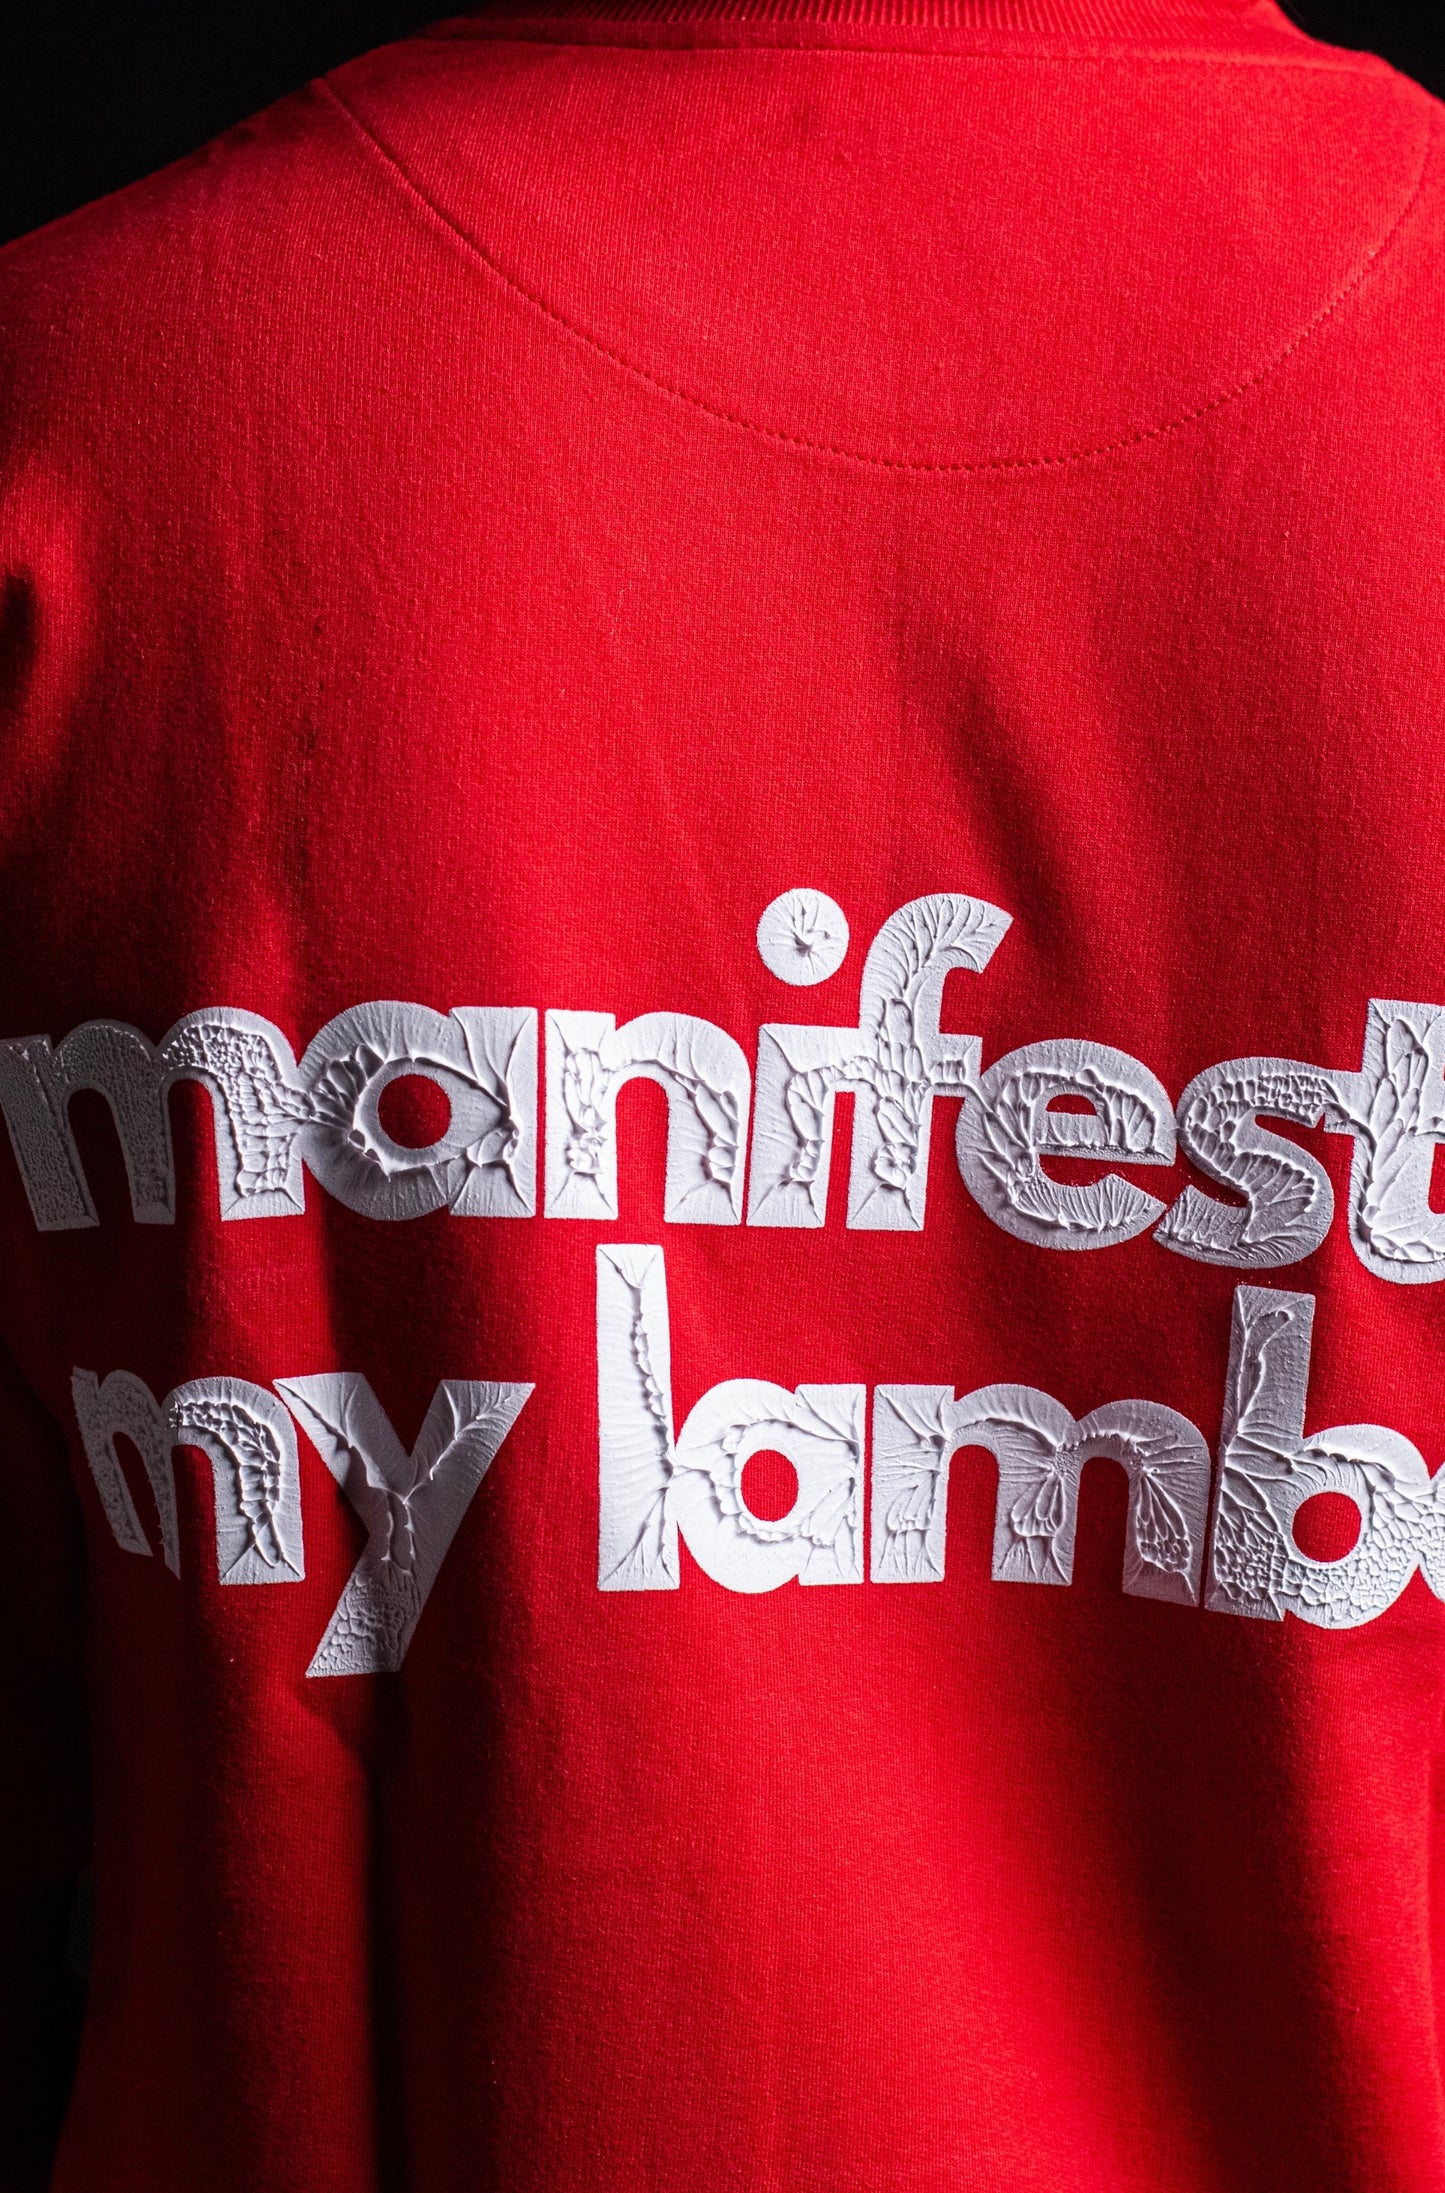 manifestin’ my lambo